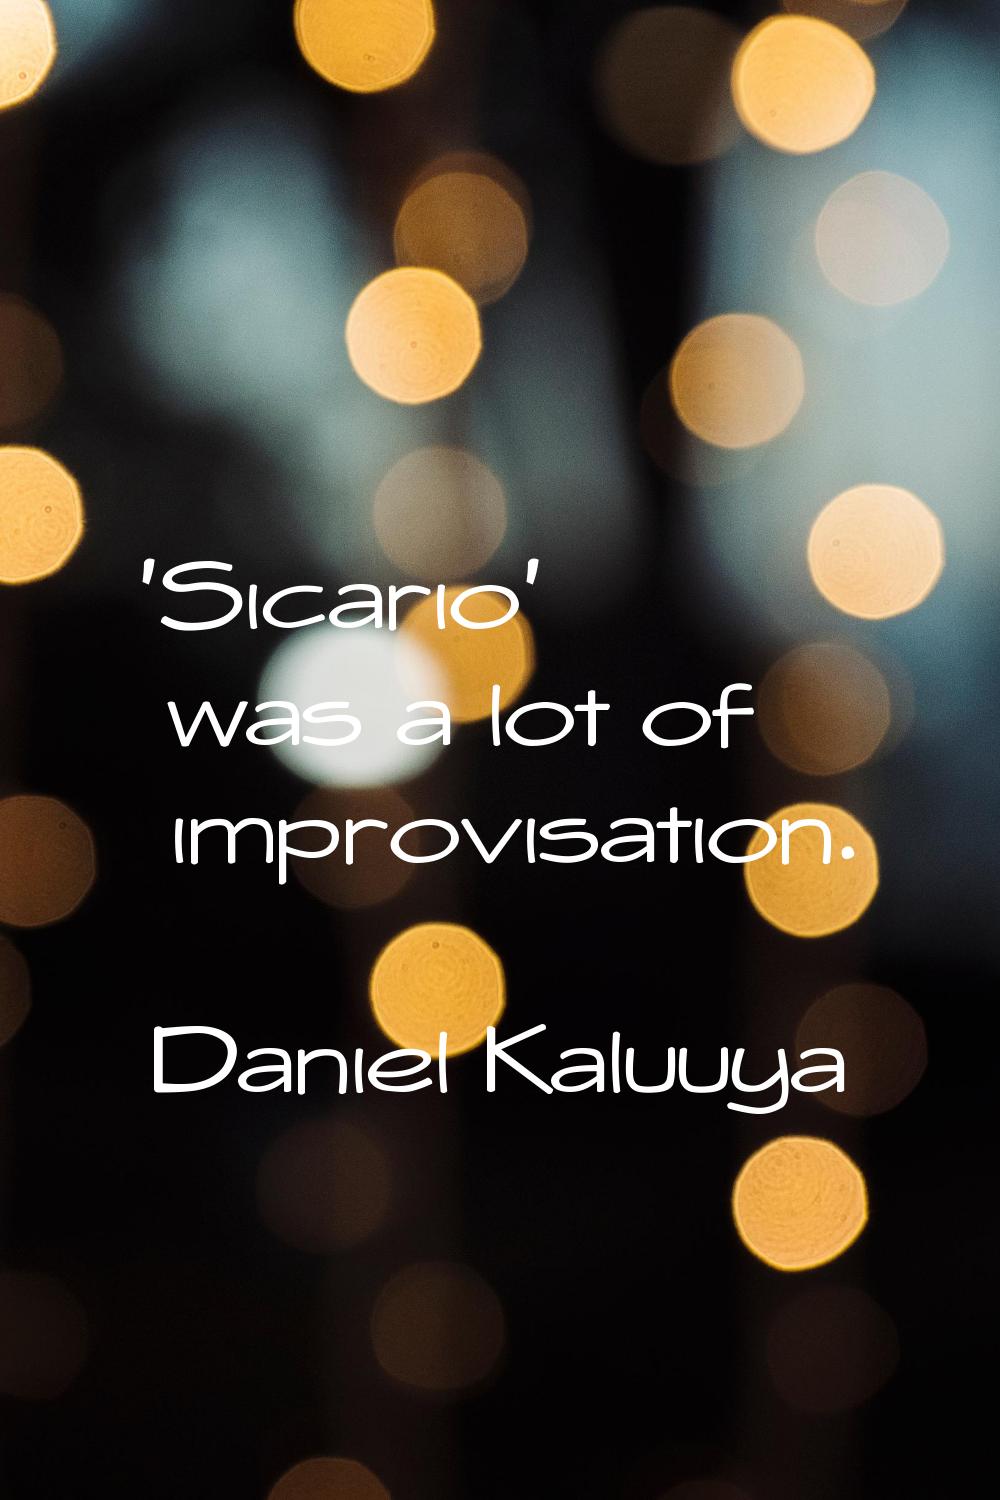 'Sicario' was a lot of improvisation.